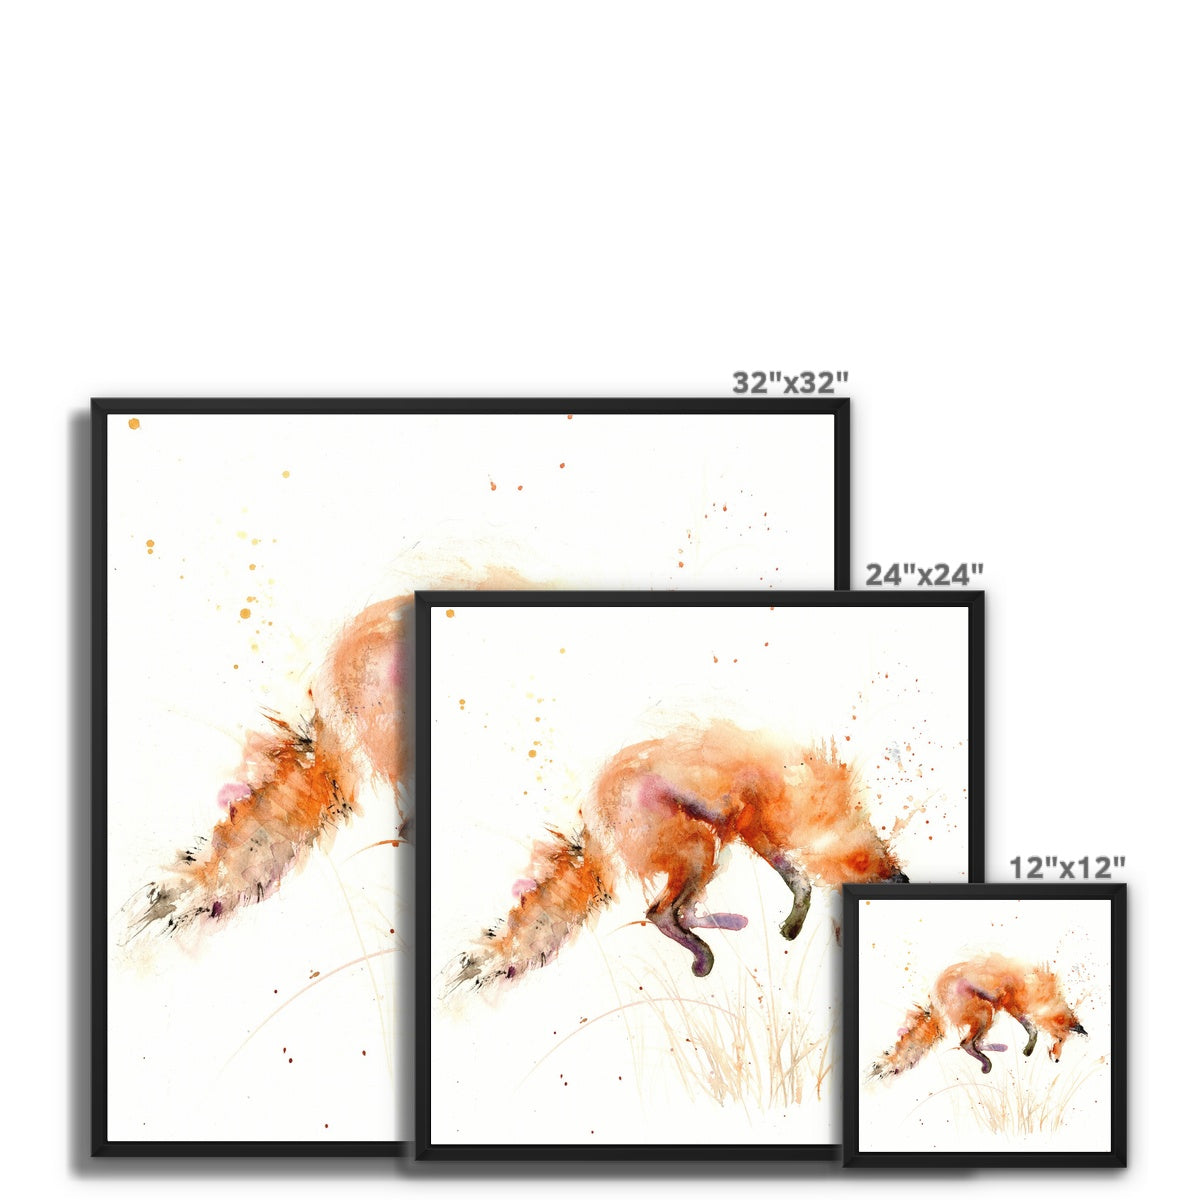 Leaping fox Framed Canvas - Jen Buckley Art limited edition animal art prints